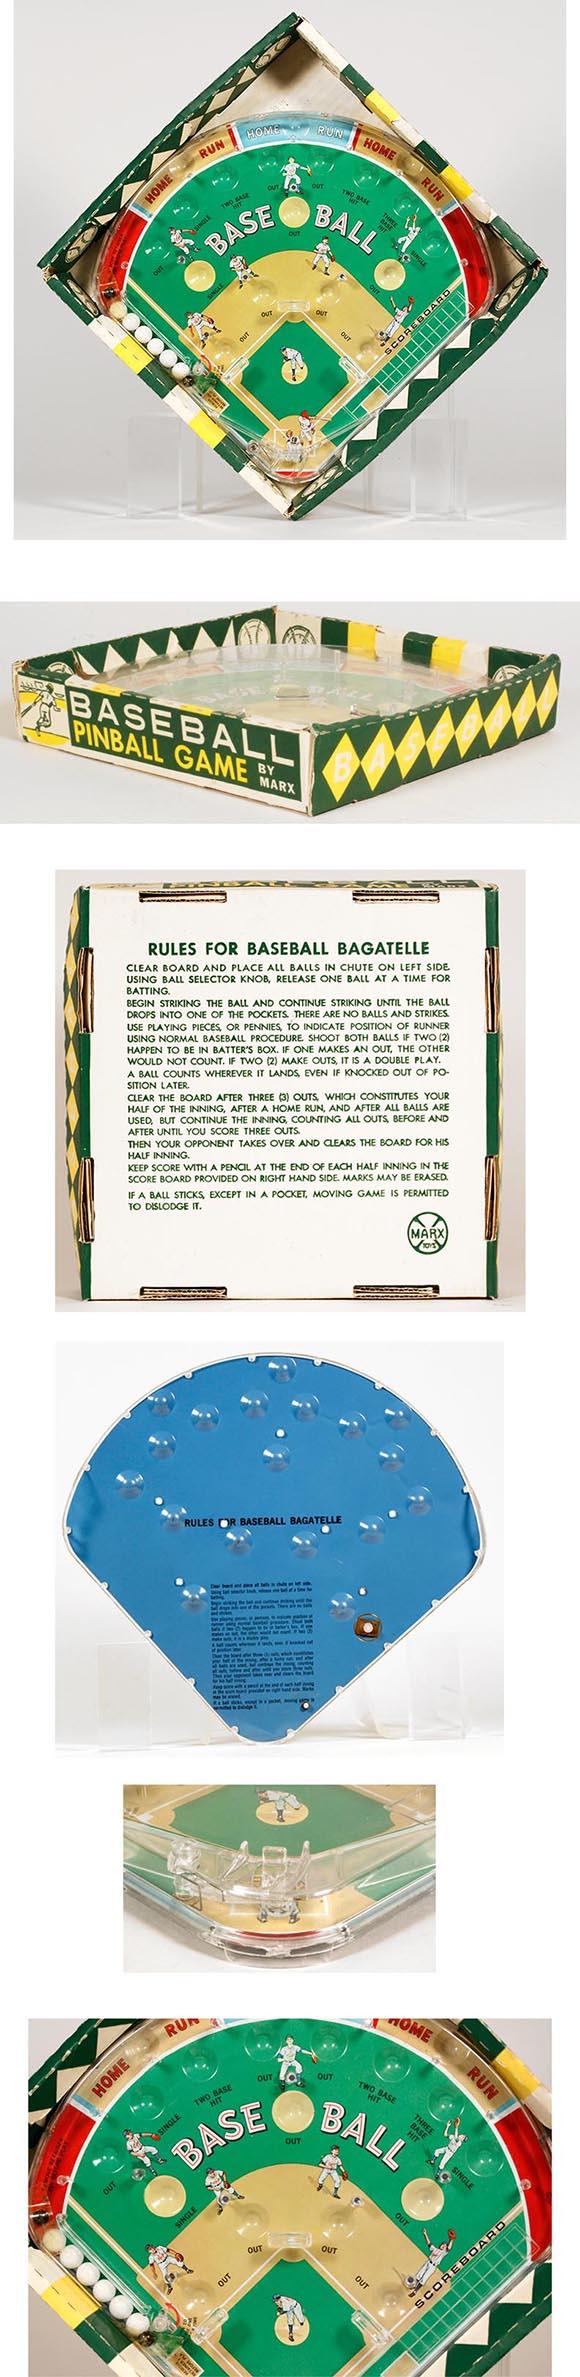 c.1962 Marx Baseball Pinball Game in Original Box